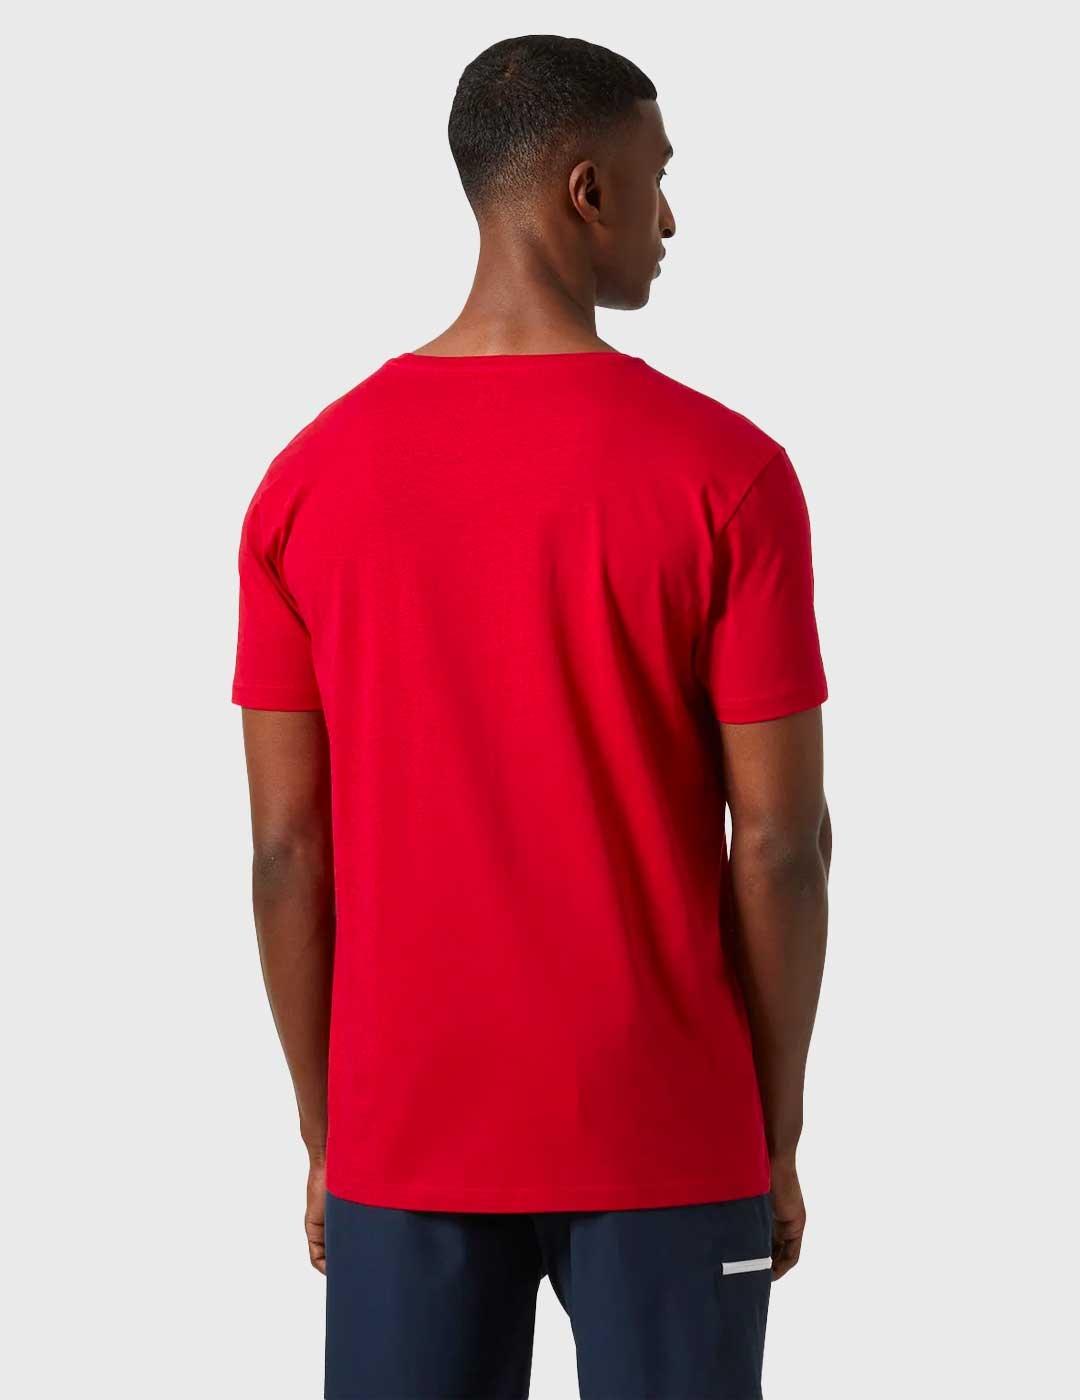 Camiseta Helly Hansen Shoreline roja para hombre